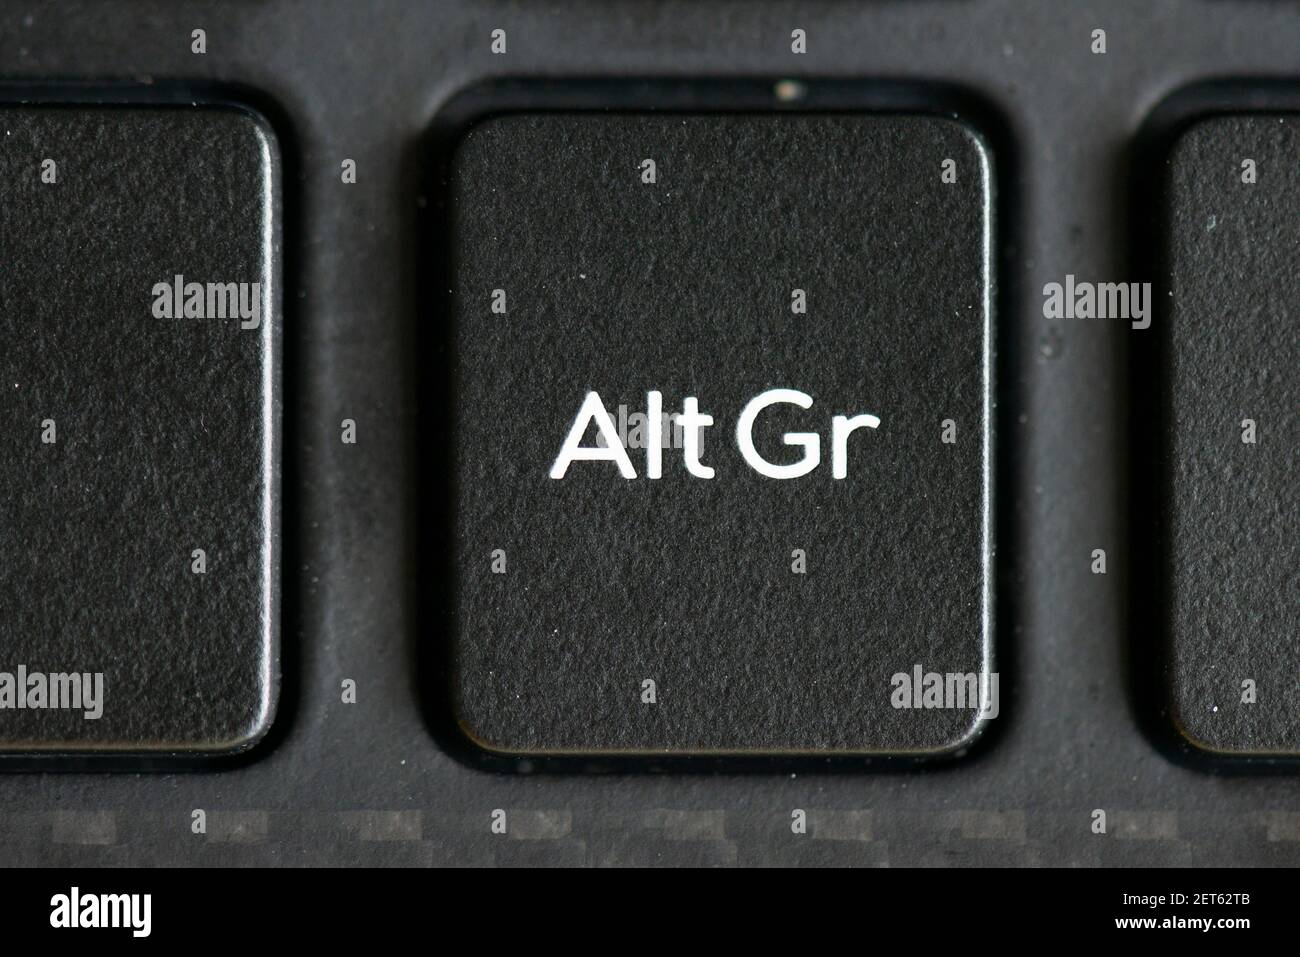 Alt Gr key on a laptop keyboard Stock Photo - Alamy